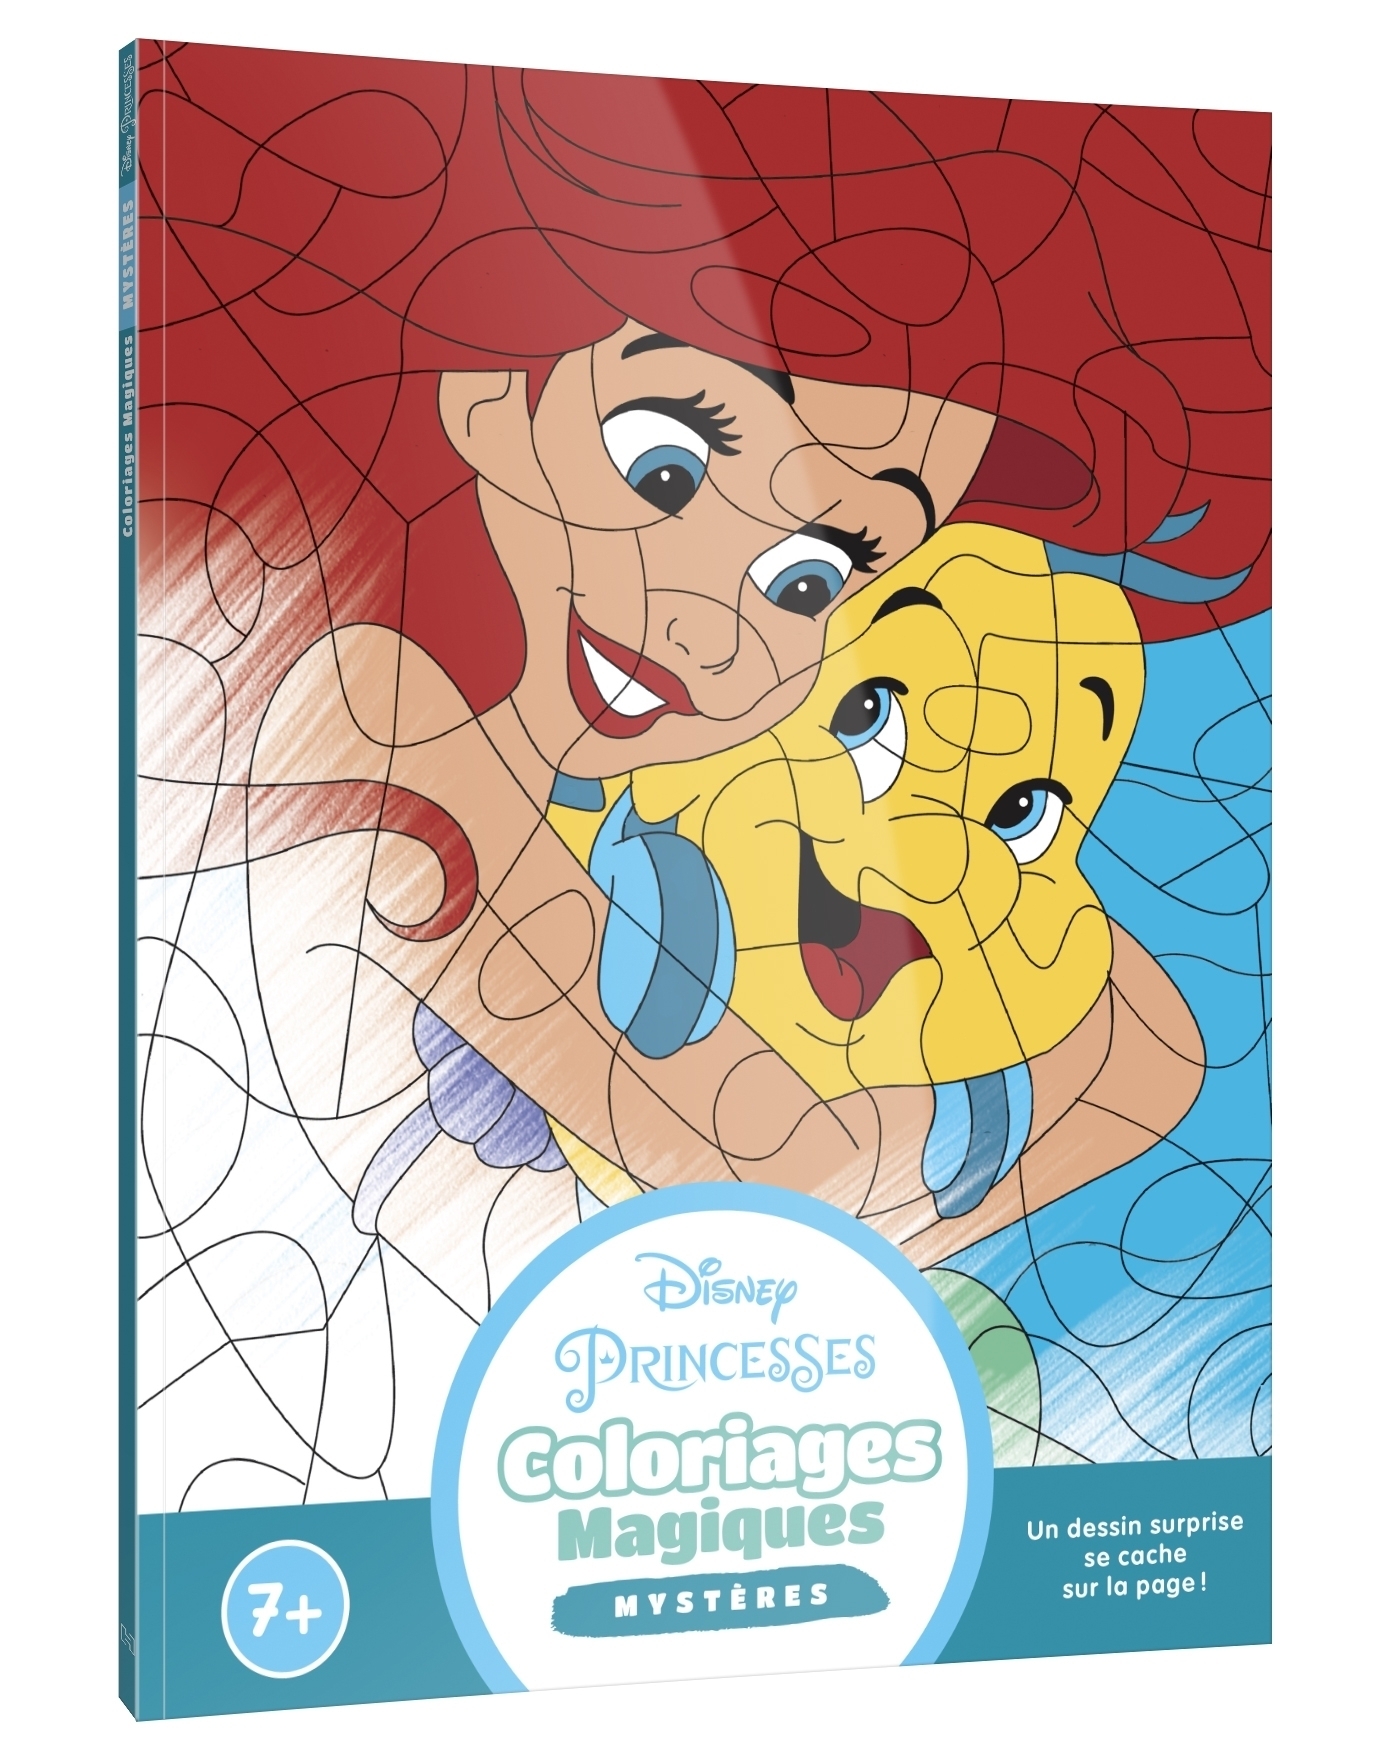 Walt Disney company - Disney princesses : coloriages mystères